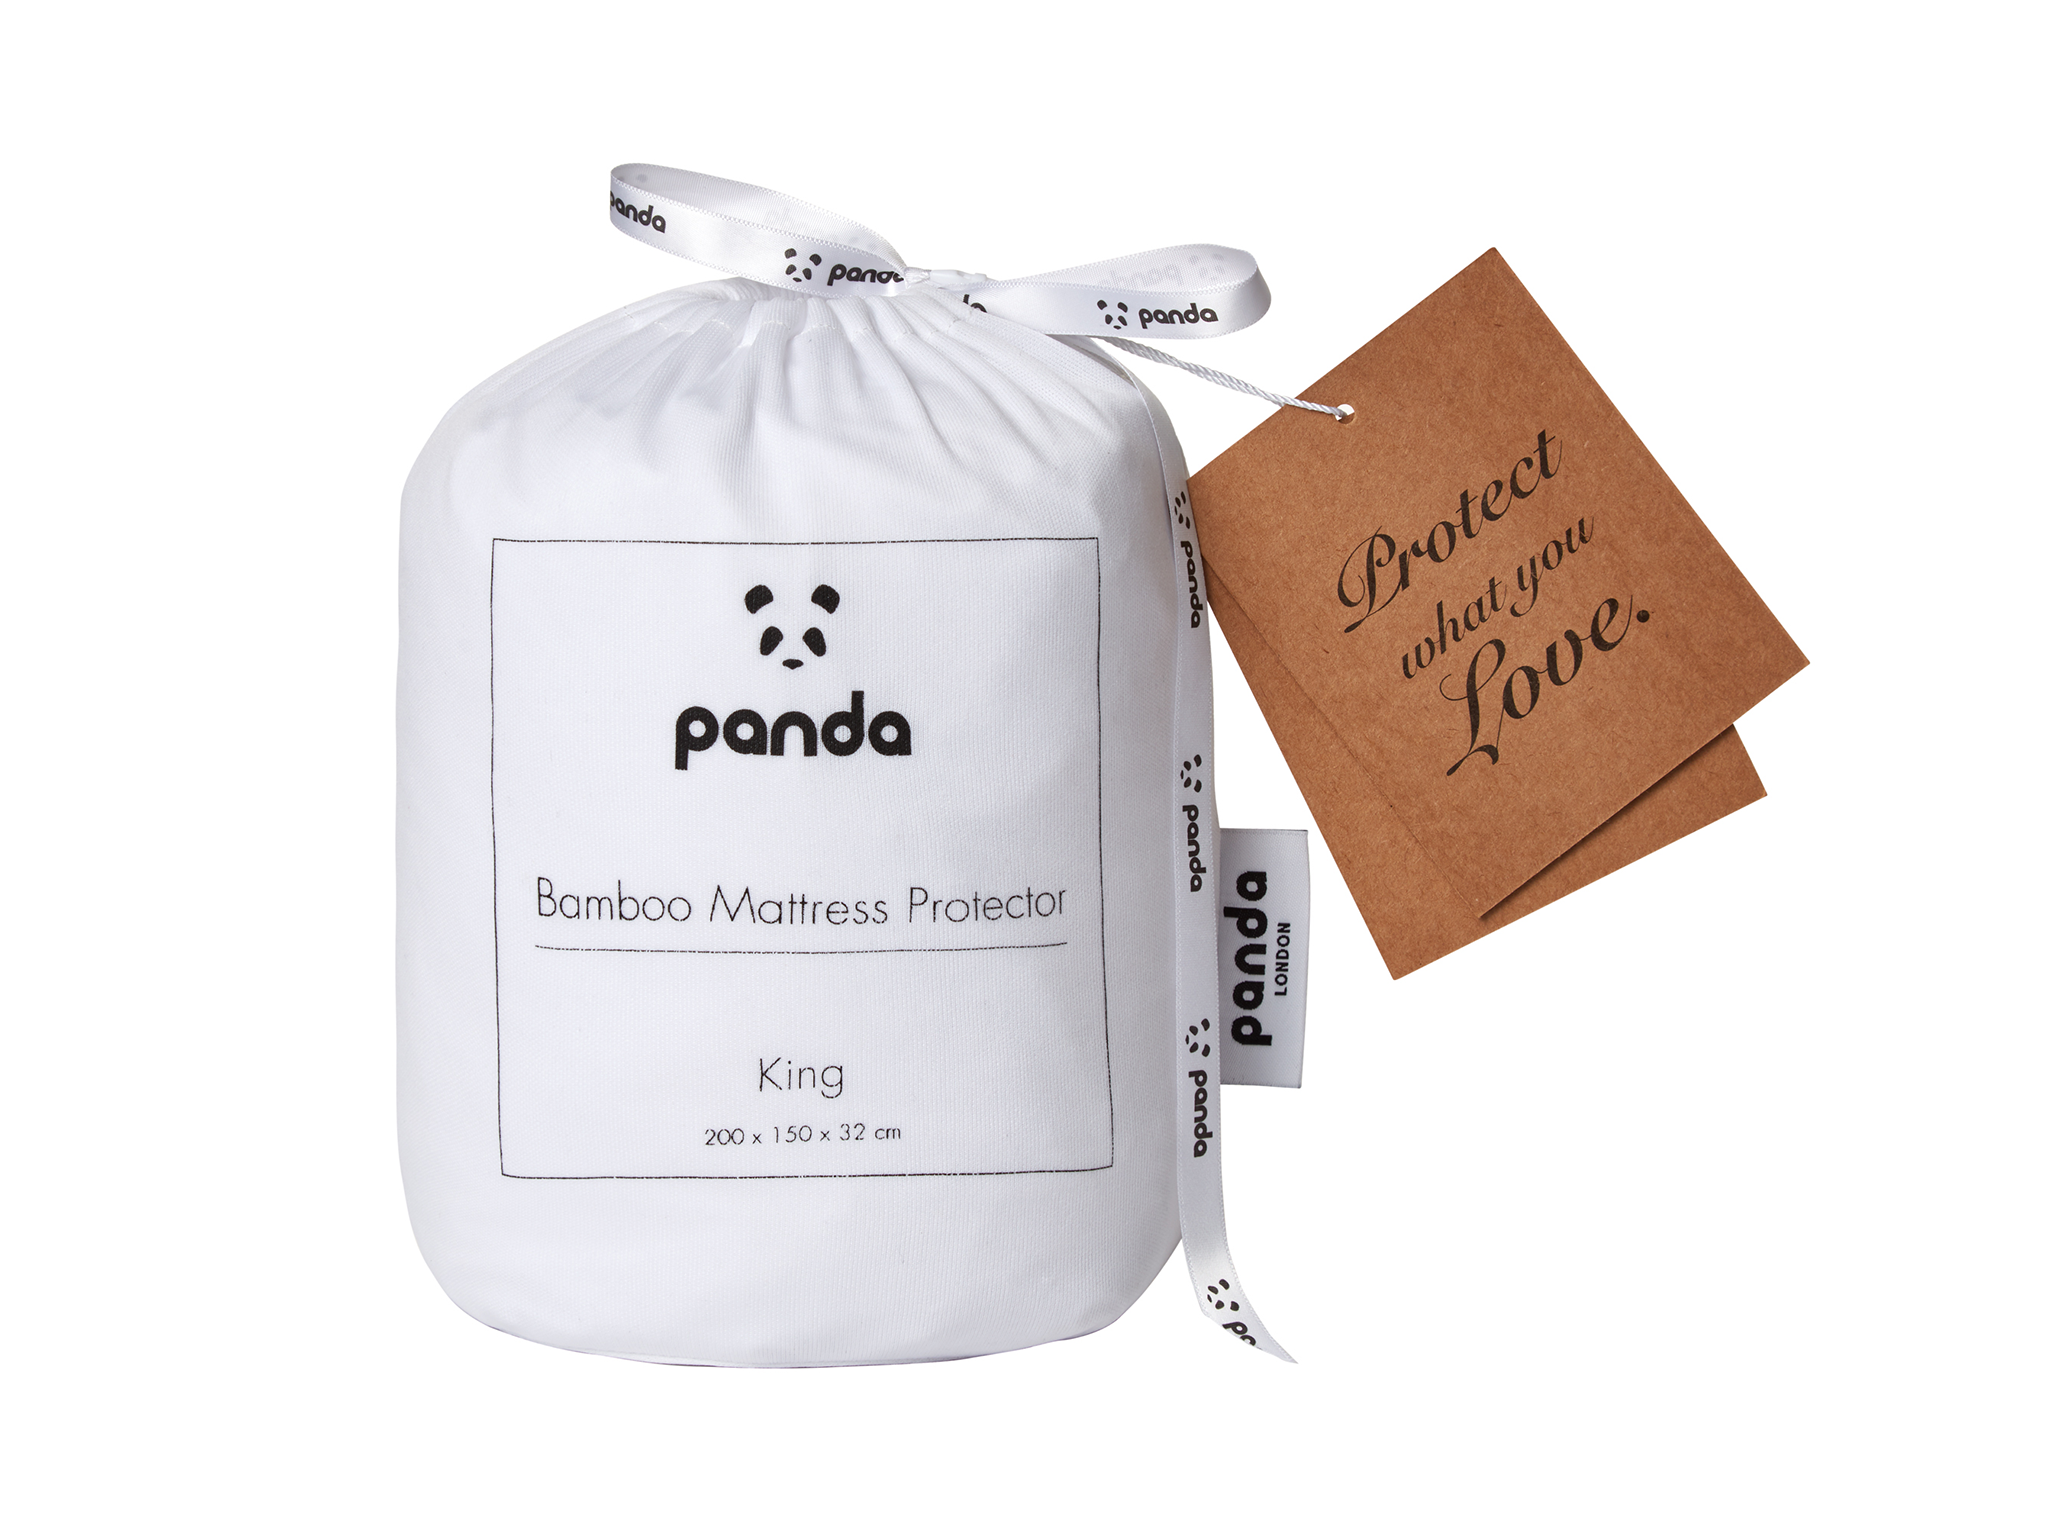 Panda bamboo mattress protector